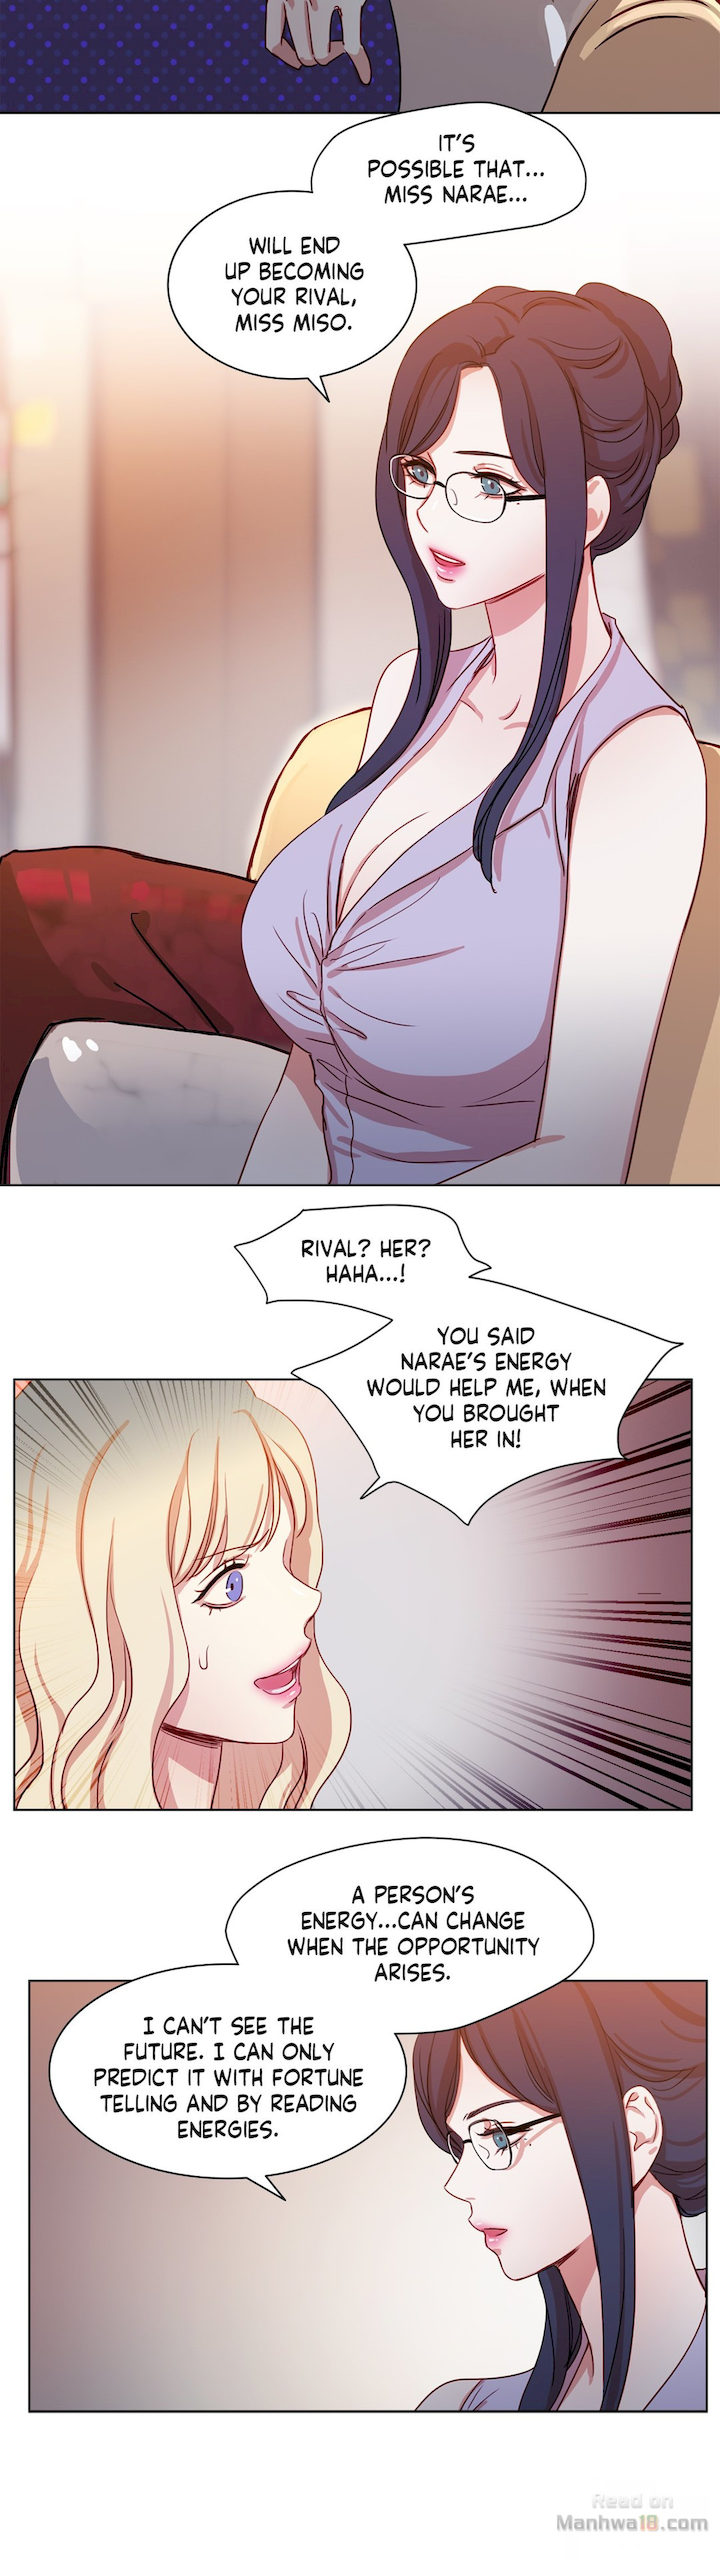 Narae’s Fantasy - Chapter 21 Page 10